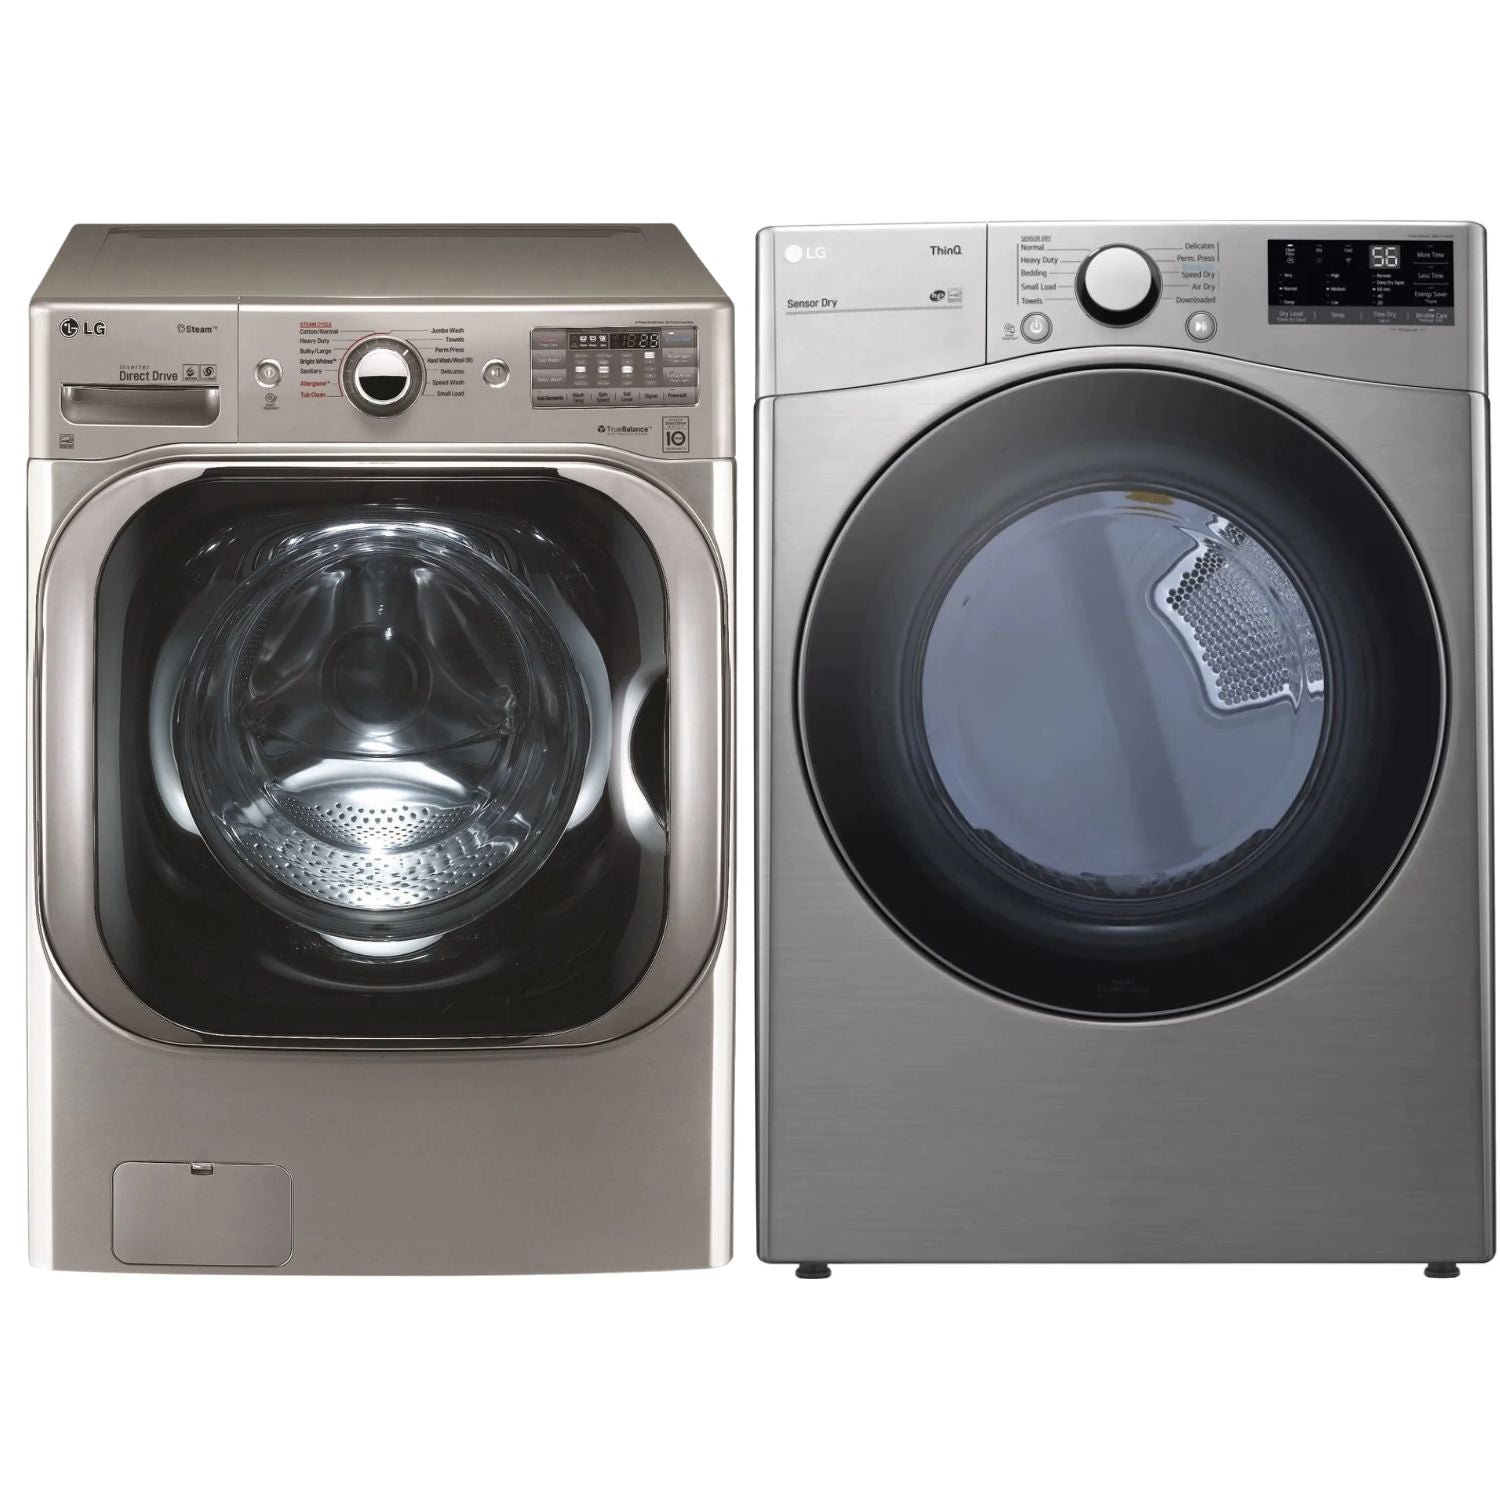 LG GIANT DRYER: 7.3 cu.ft Standard Capacity Dryer